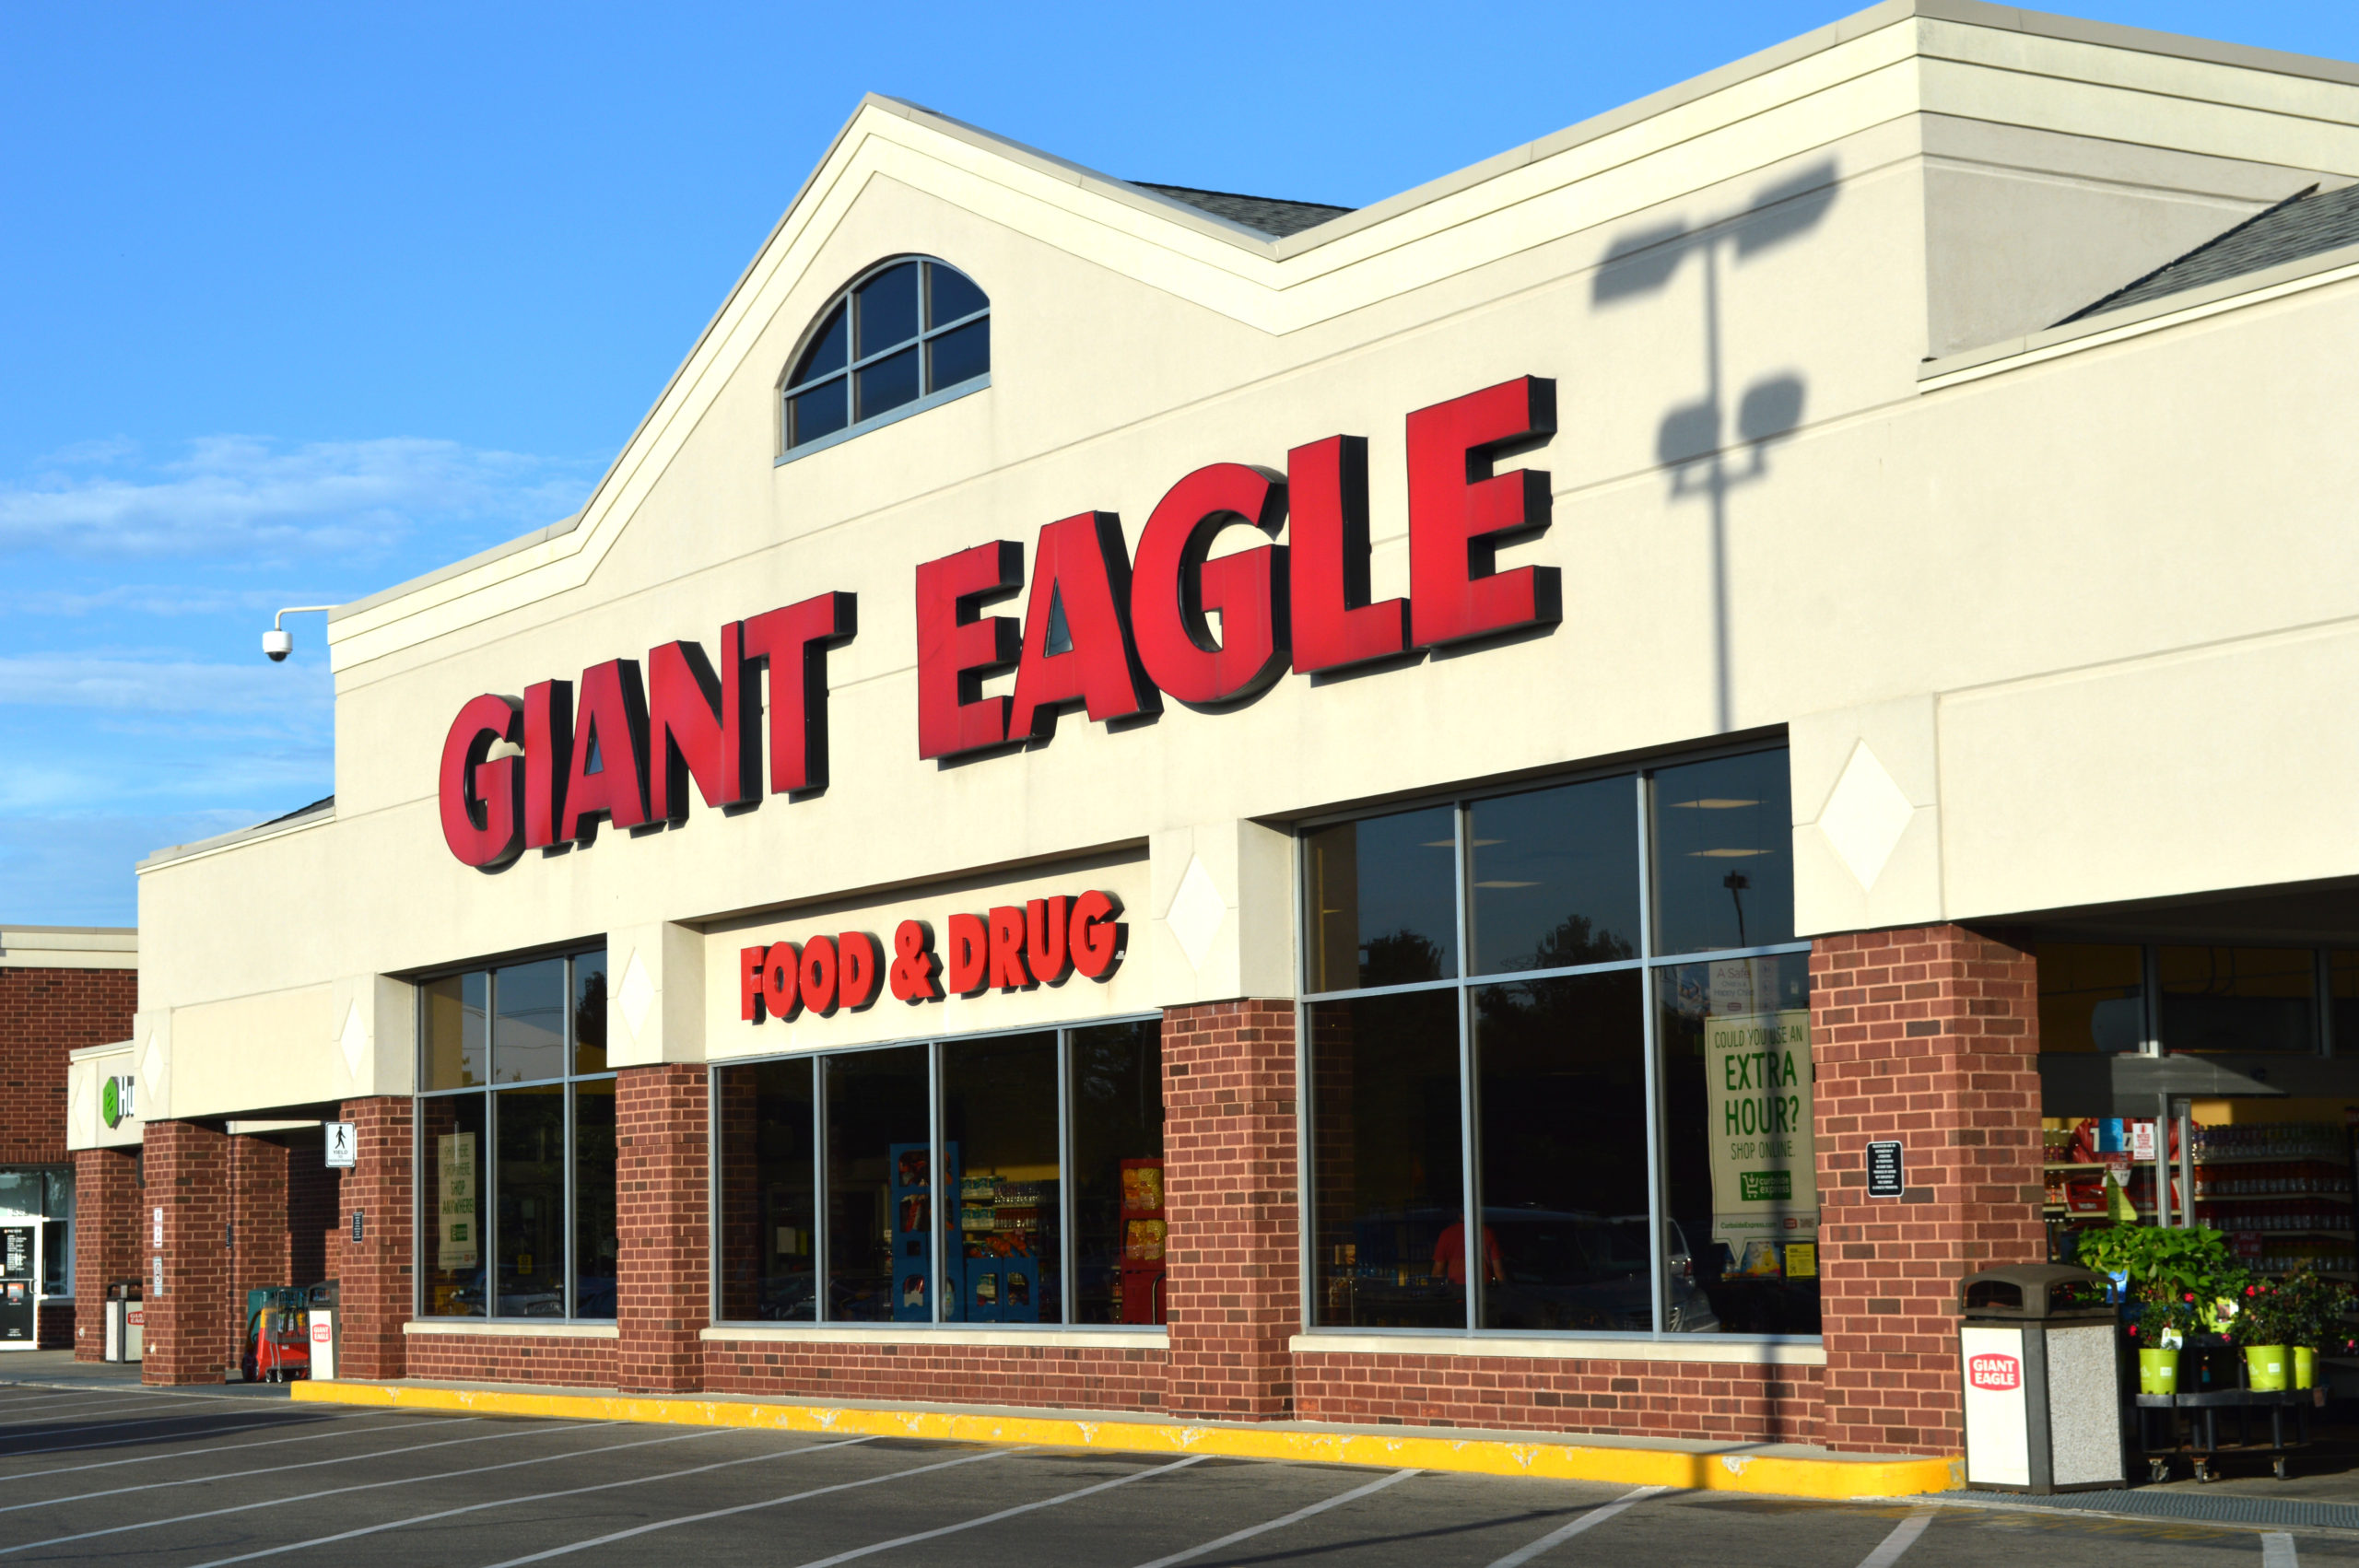 Giant Eagle CEO Exits